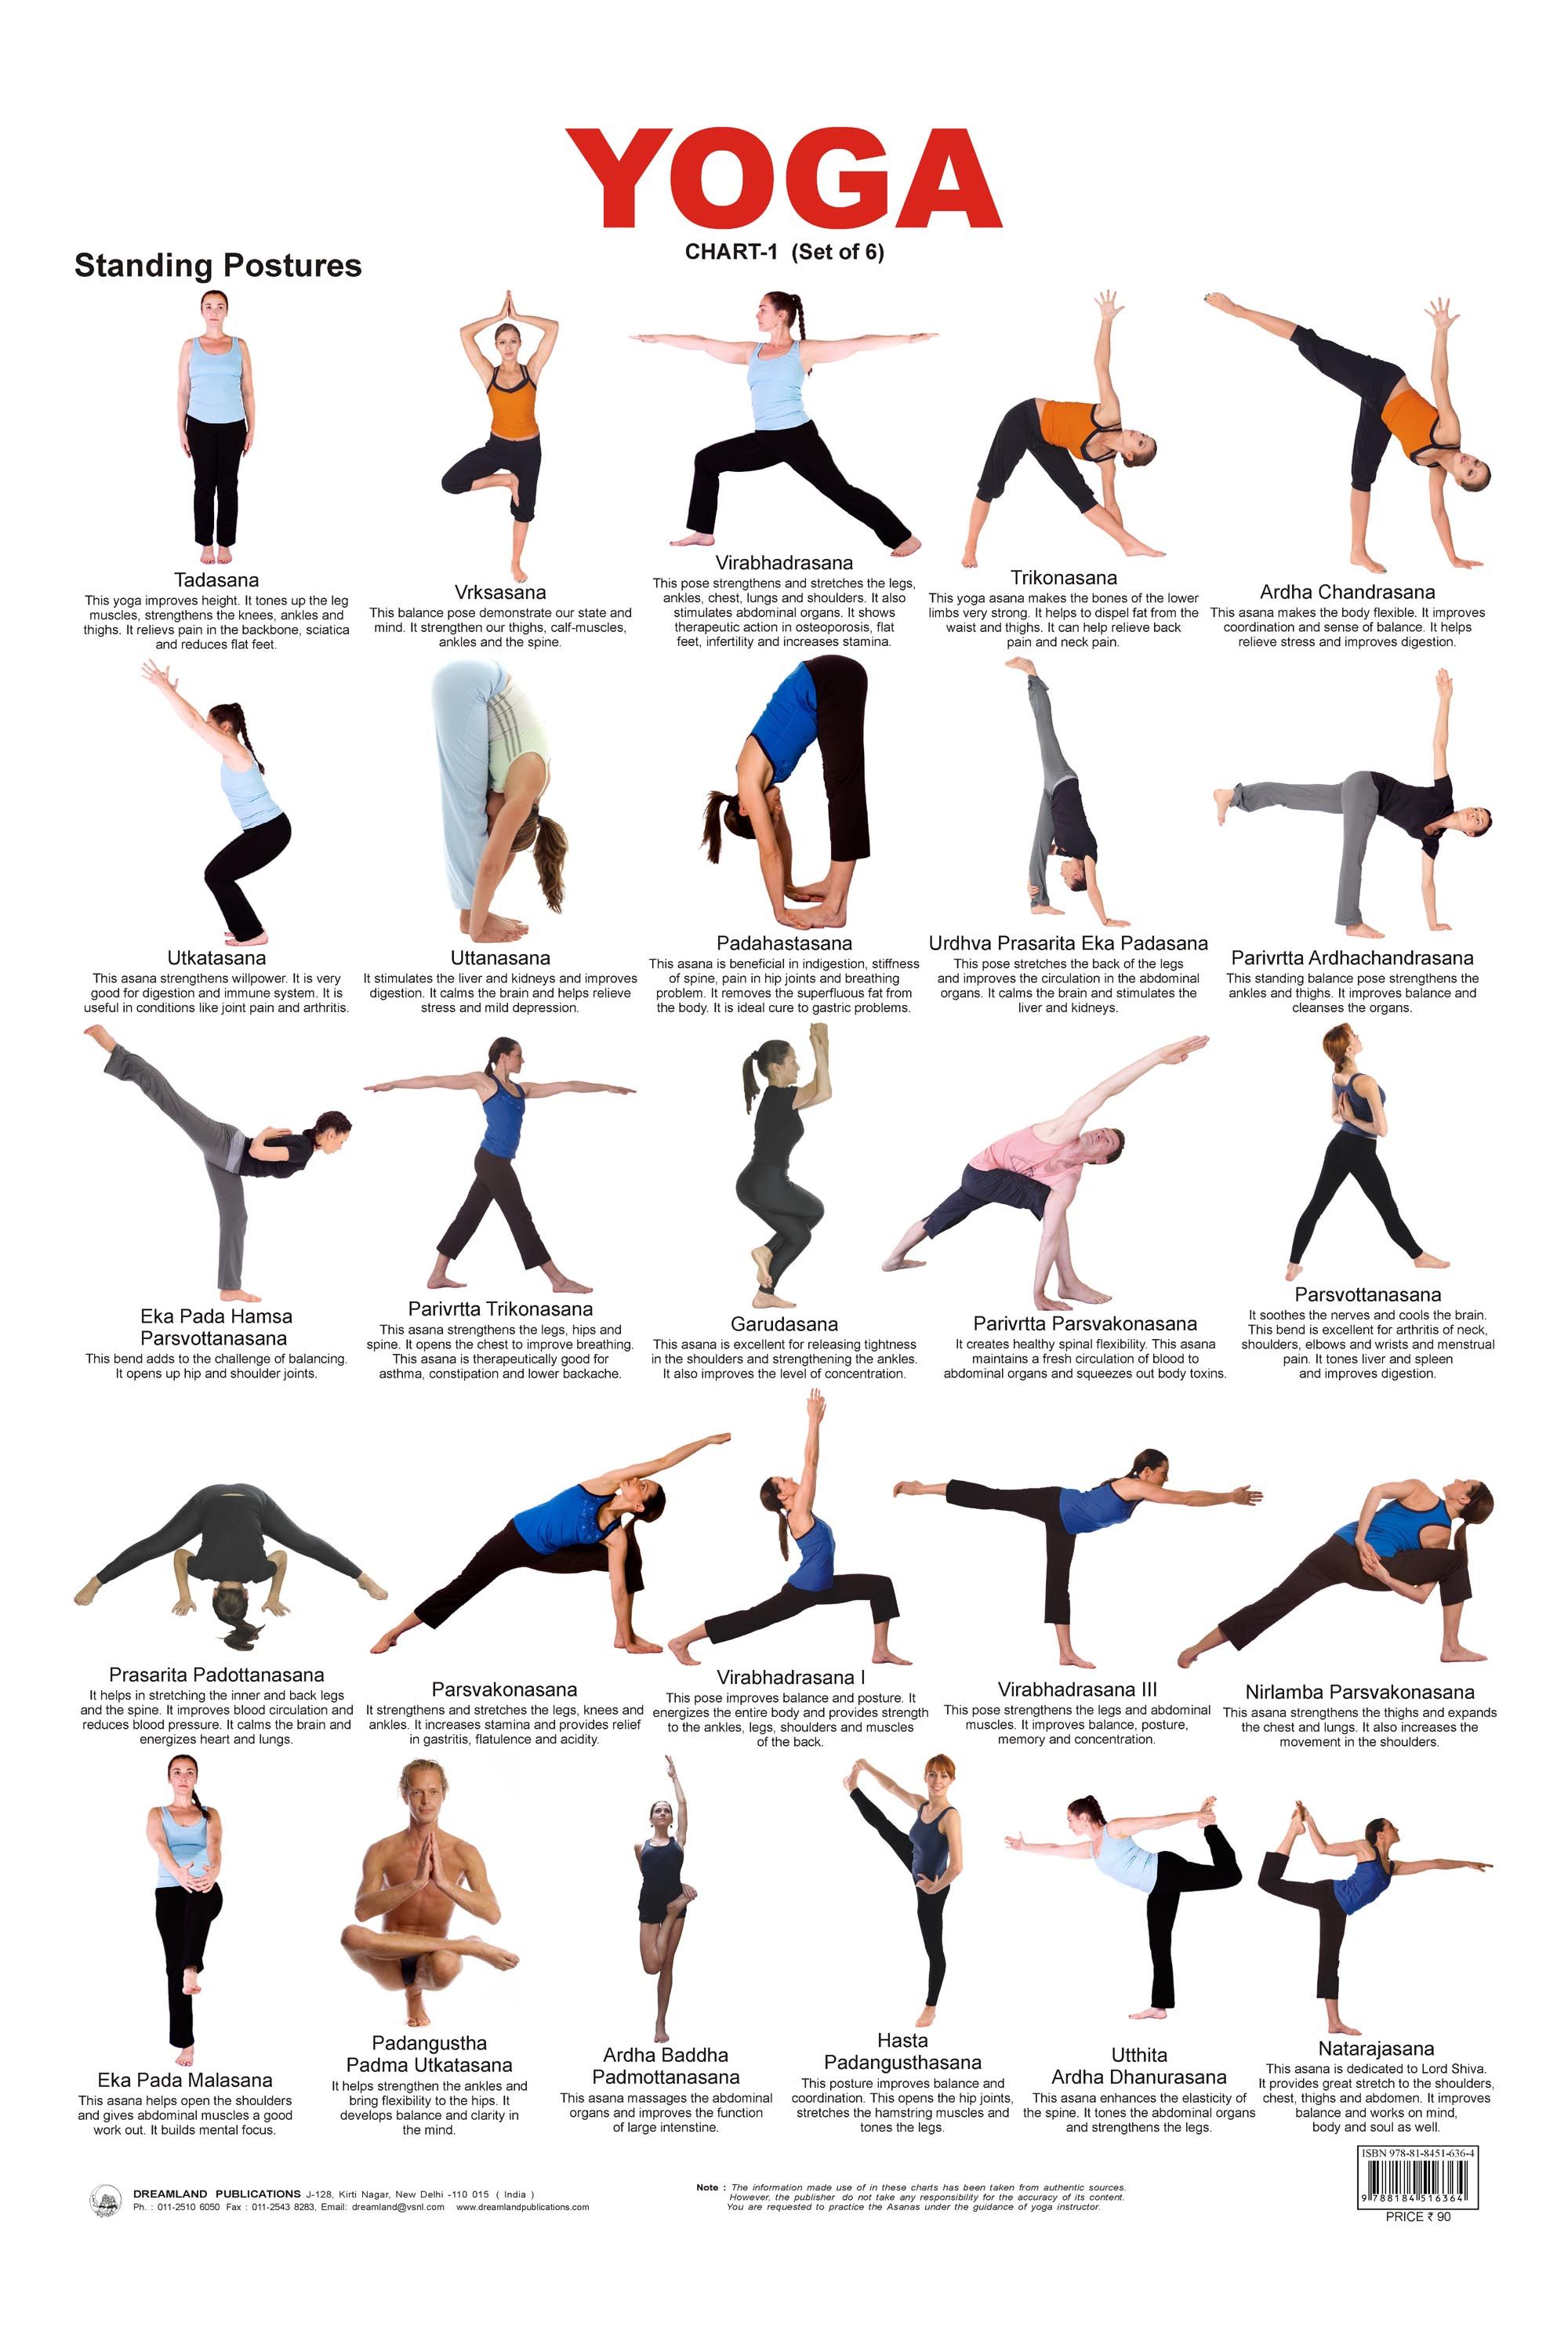 Trikonasana) Triangle Pose Benefits | Yoga poses chart, Yoga and ...